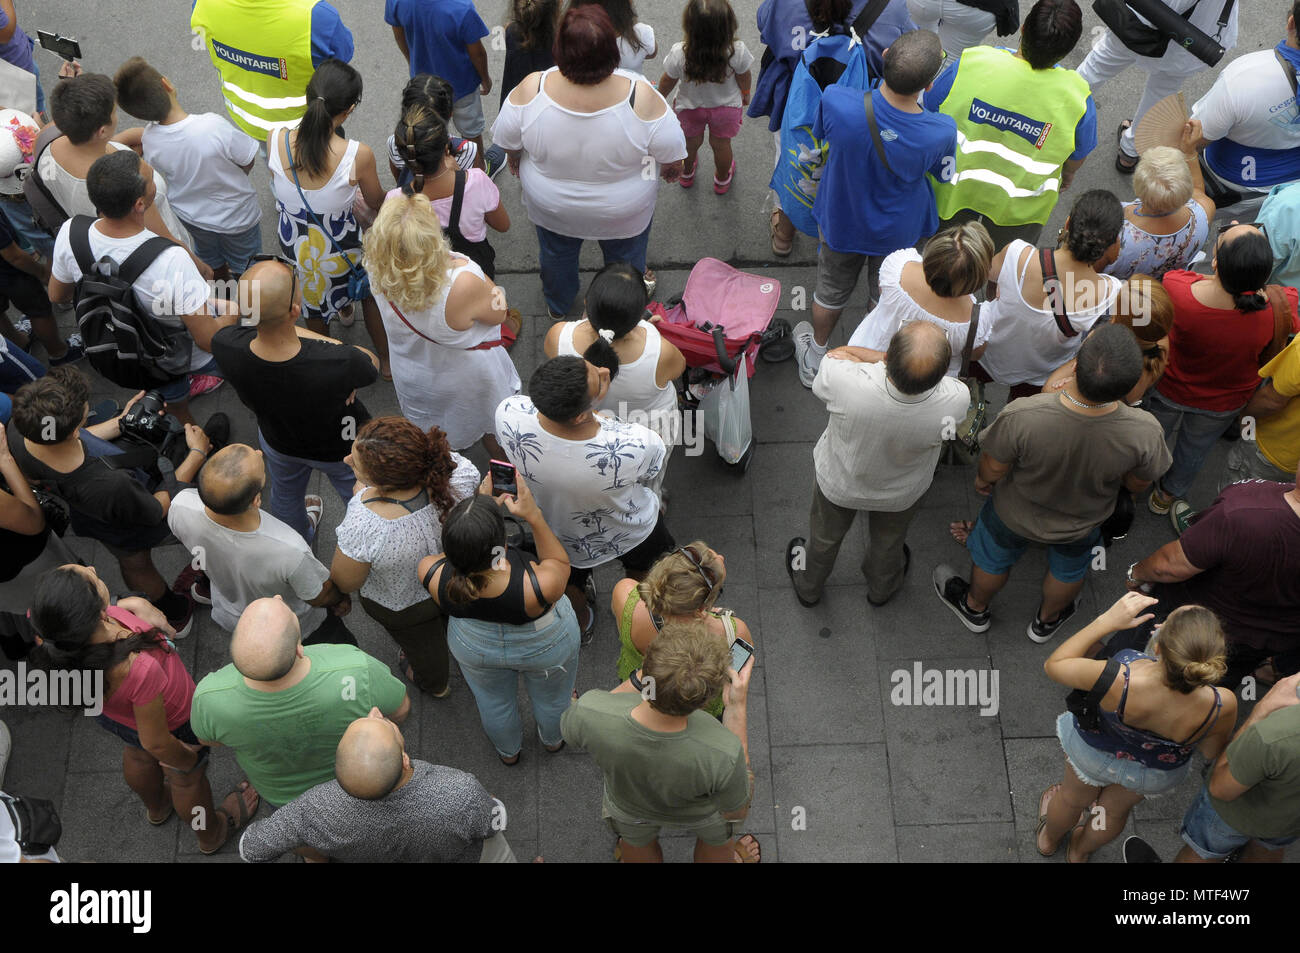 Kahl, Köpfe mit Haaren und ohne Haare. GRACIA SOMMER FESTIVAL IN BARCELONA, Menschen Köpfe. FEST. Foto: Rosmi Stockfoto